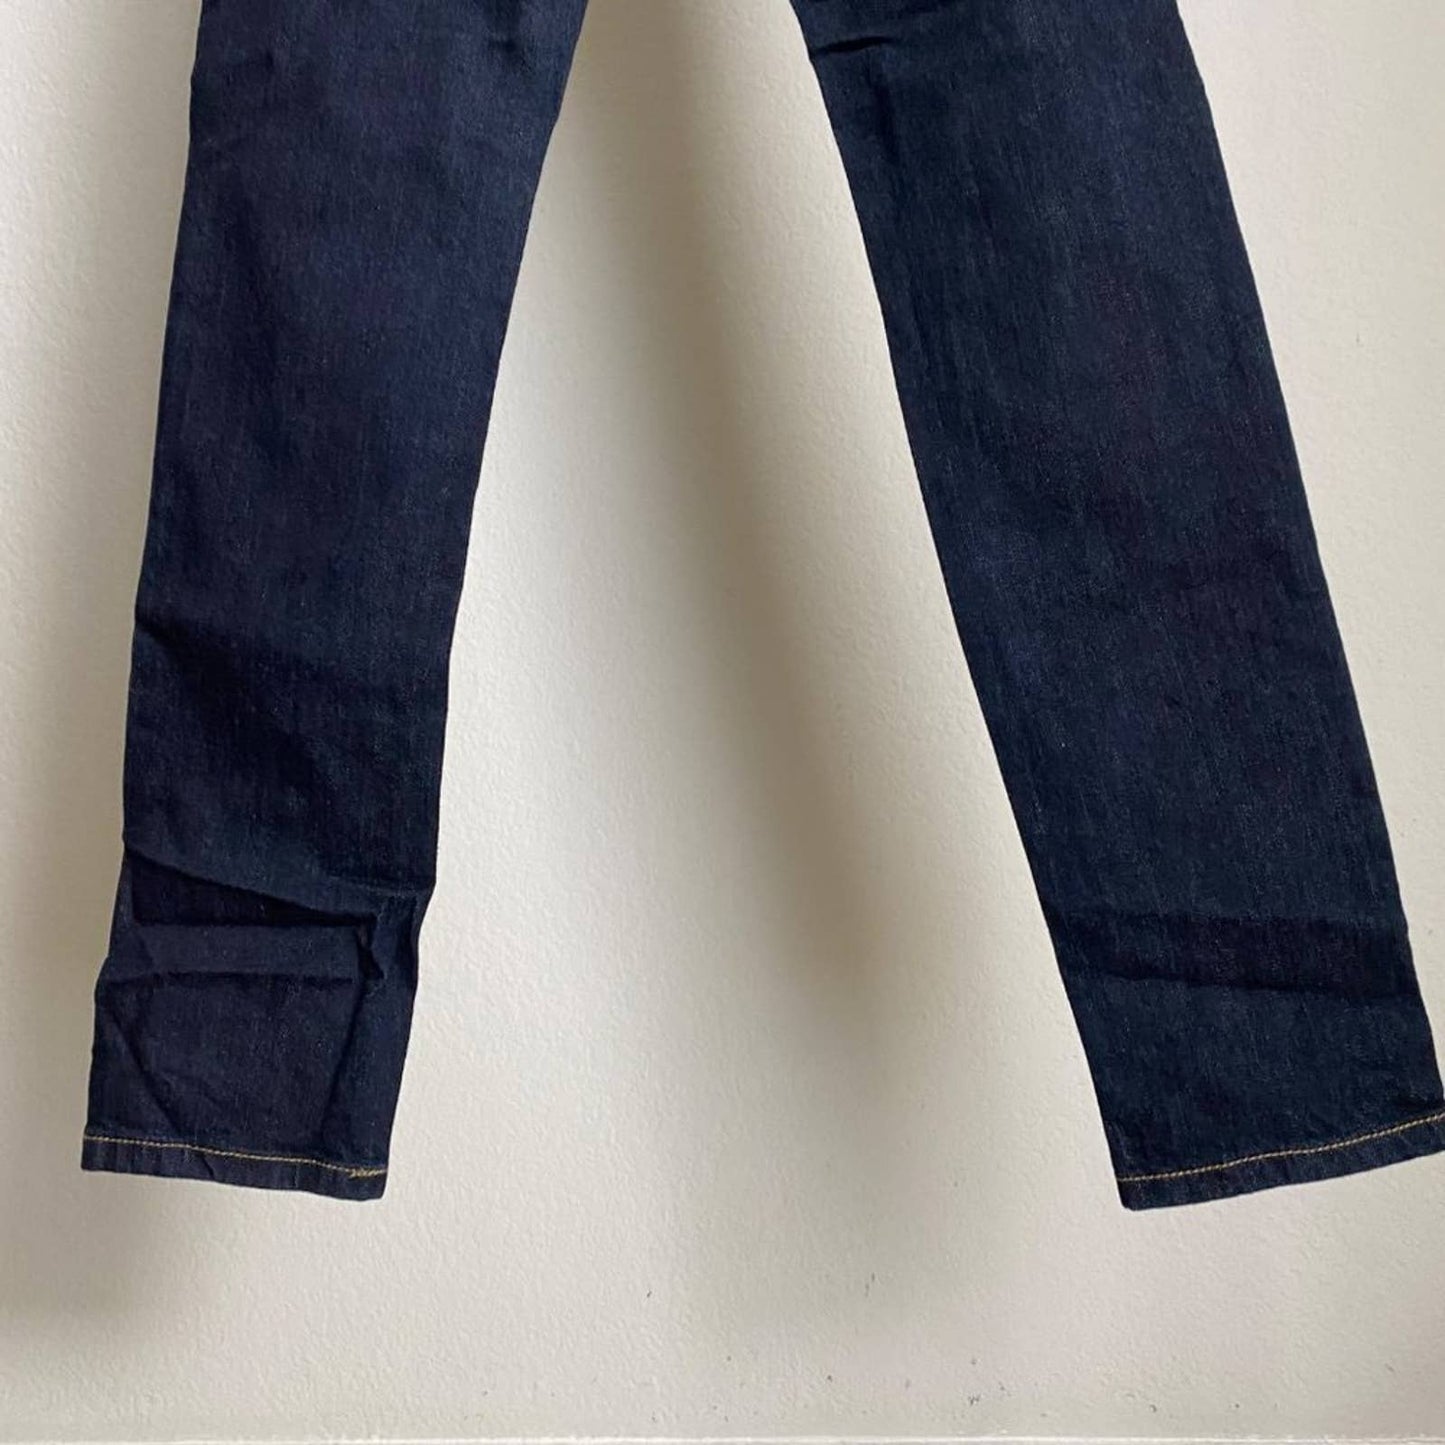 Mossimo sz 2 lyrca modern fit skinny dark denim jeans